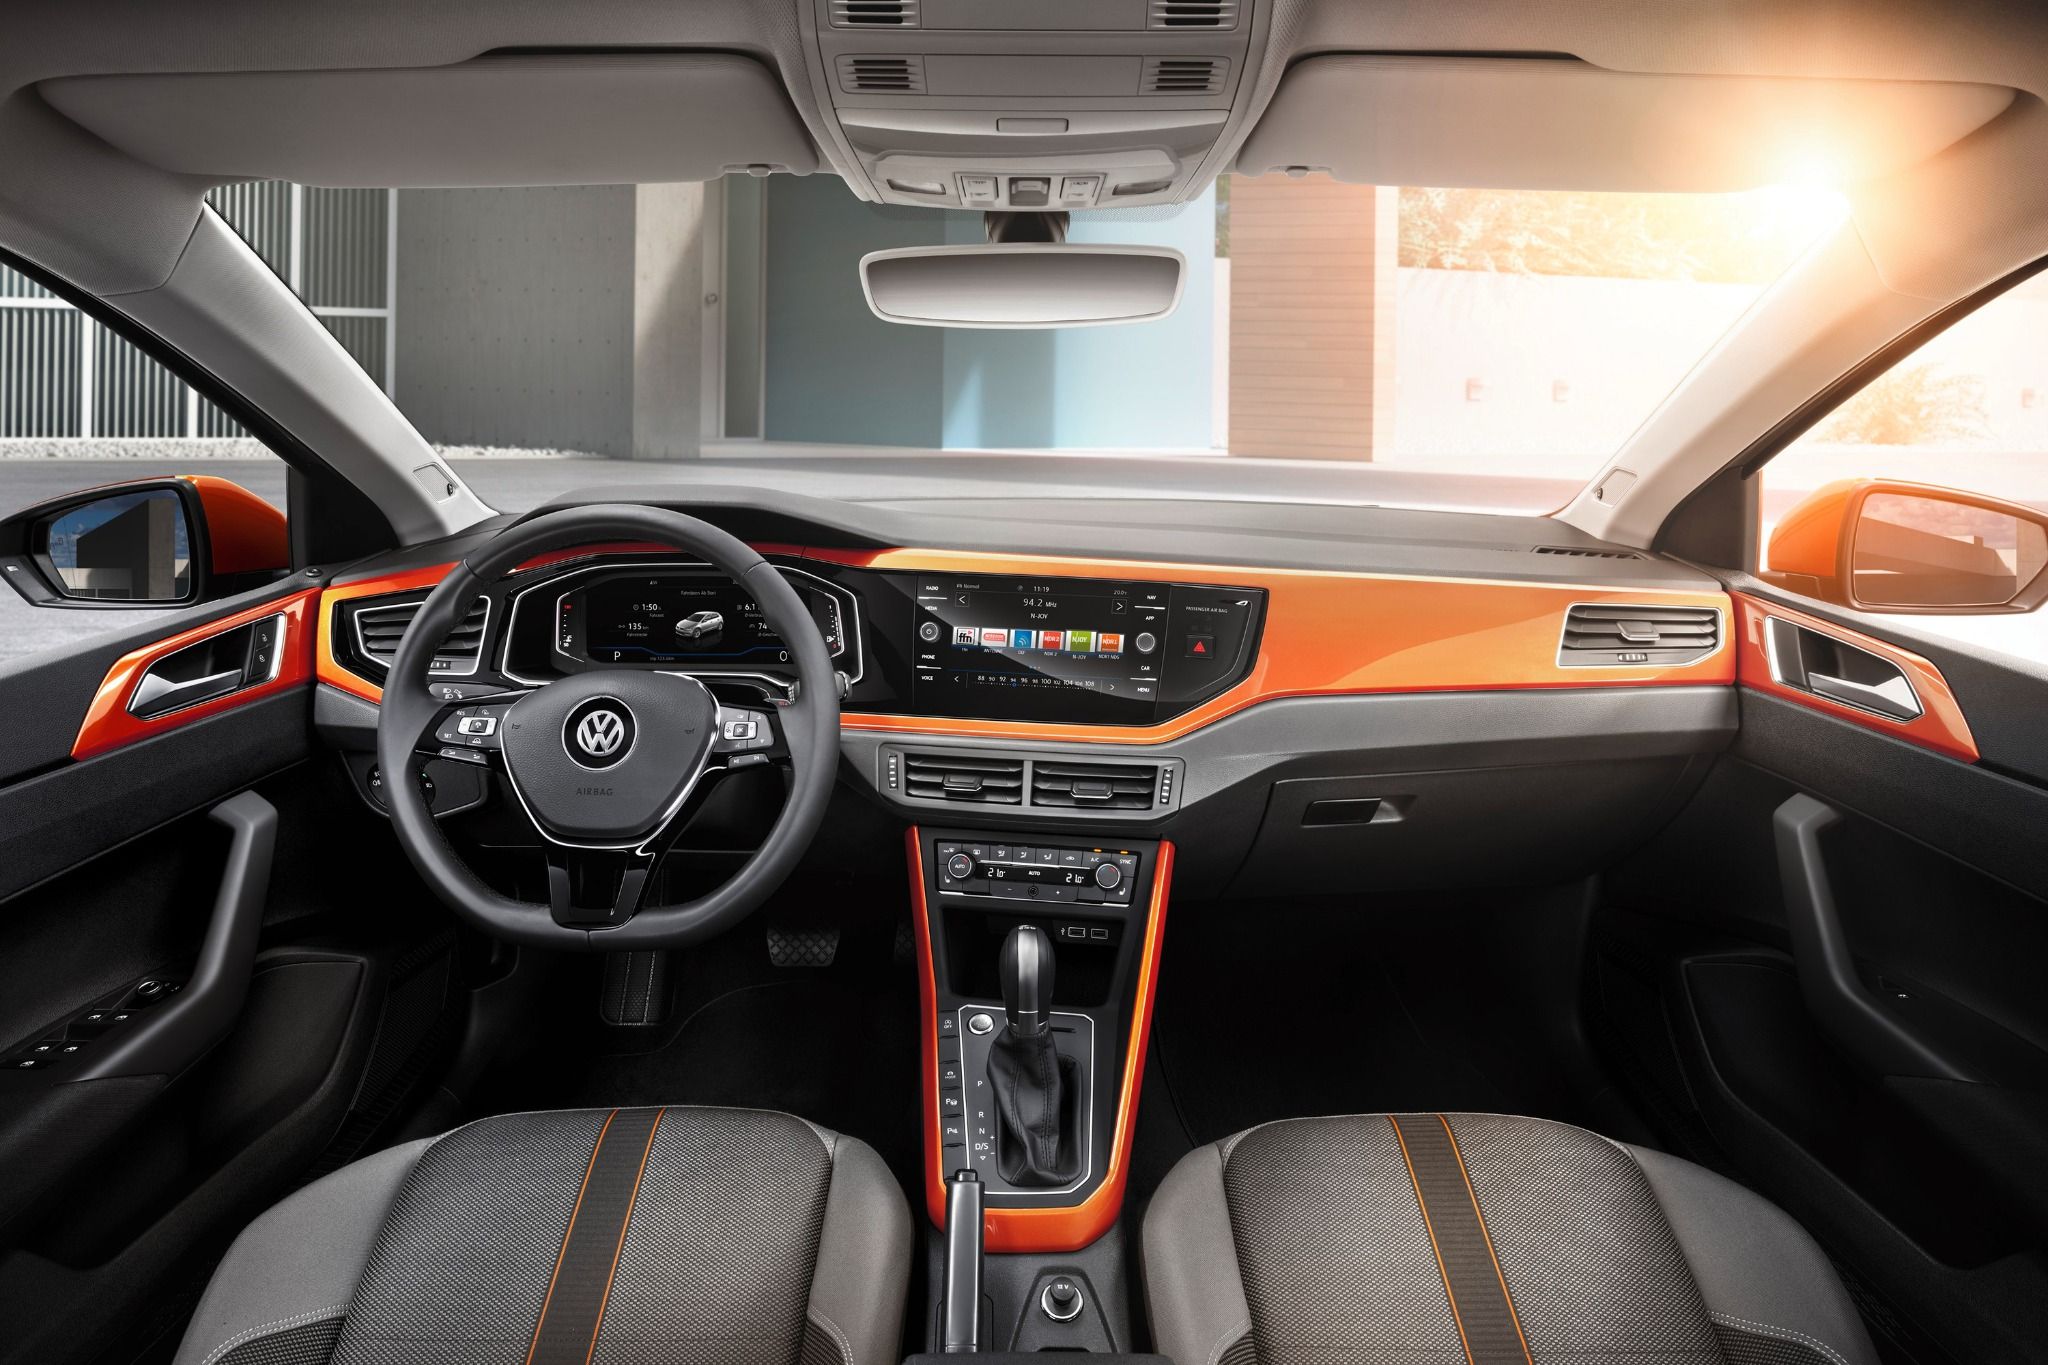 Interior view of a VW Polo R in orange